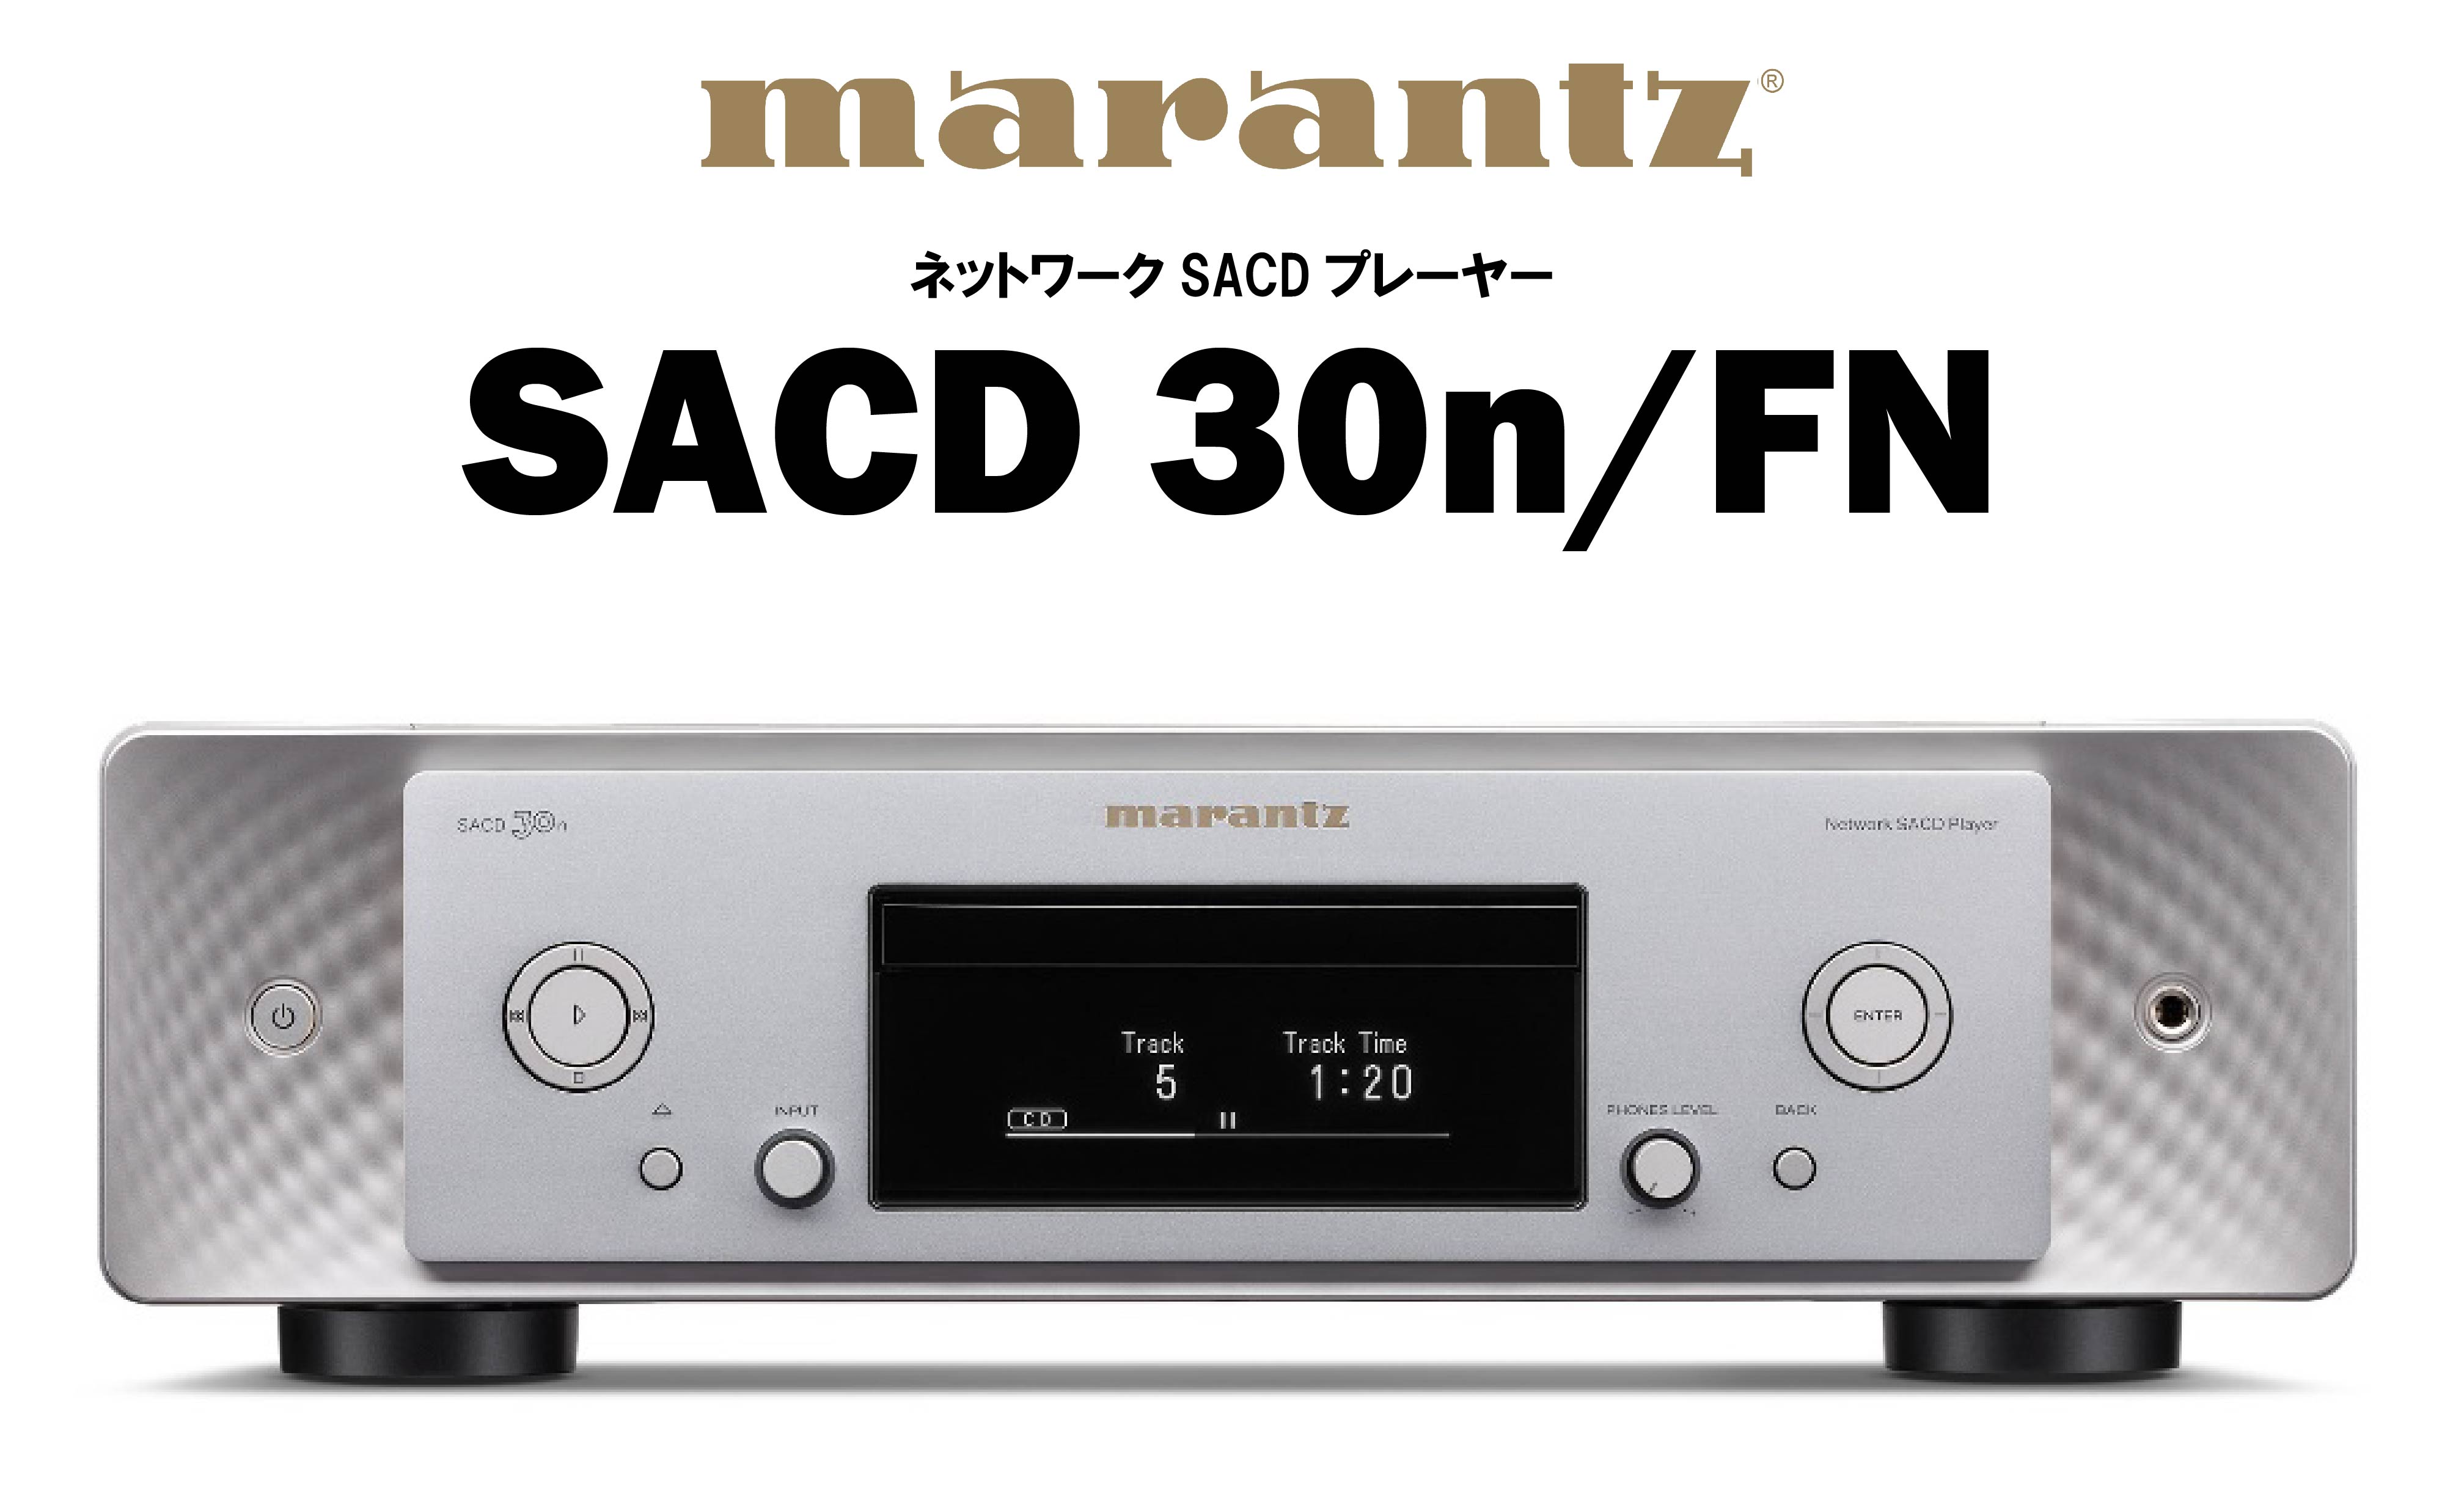 SACD/CDプレーヤー(marantz) – CORE オーディオコア